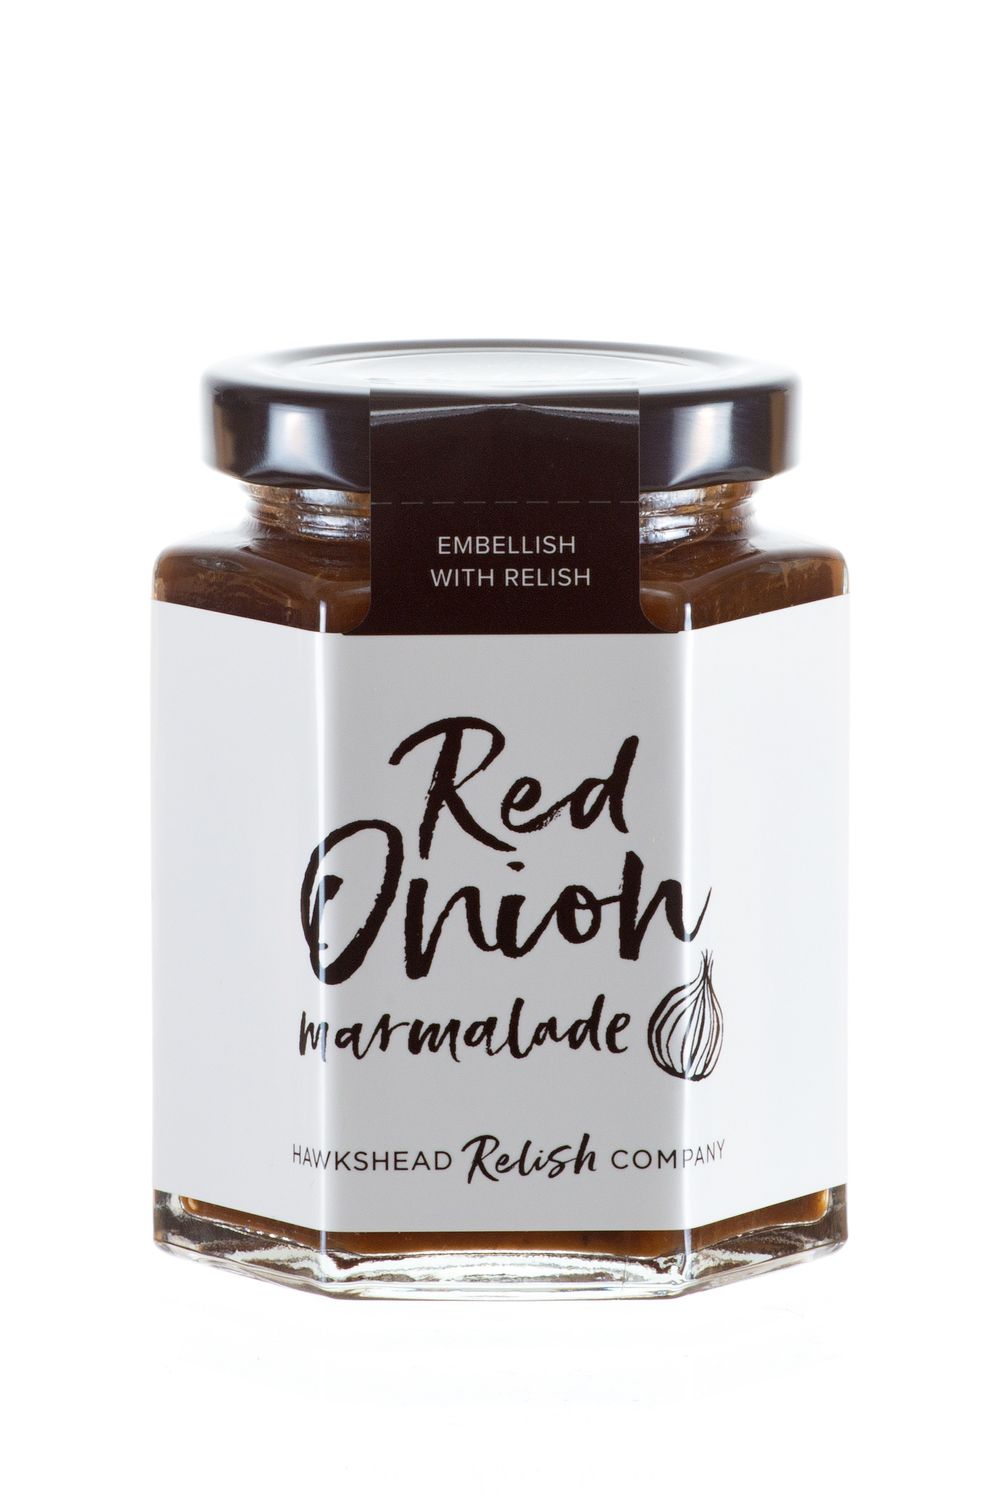 Hawkshead Relish Co. Red Onion Marmalade